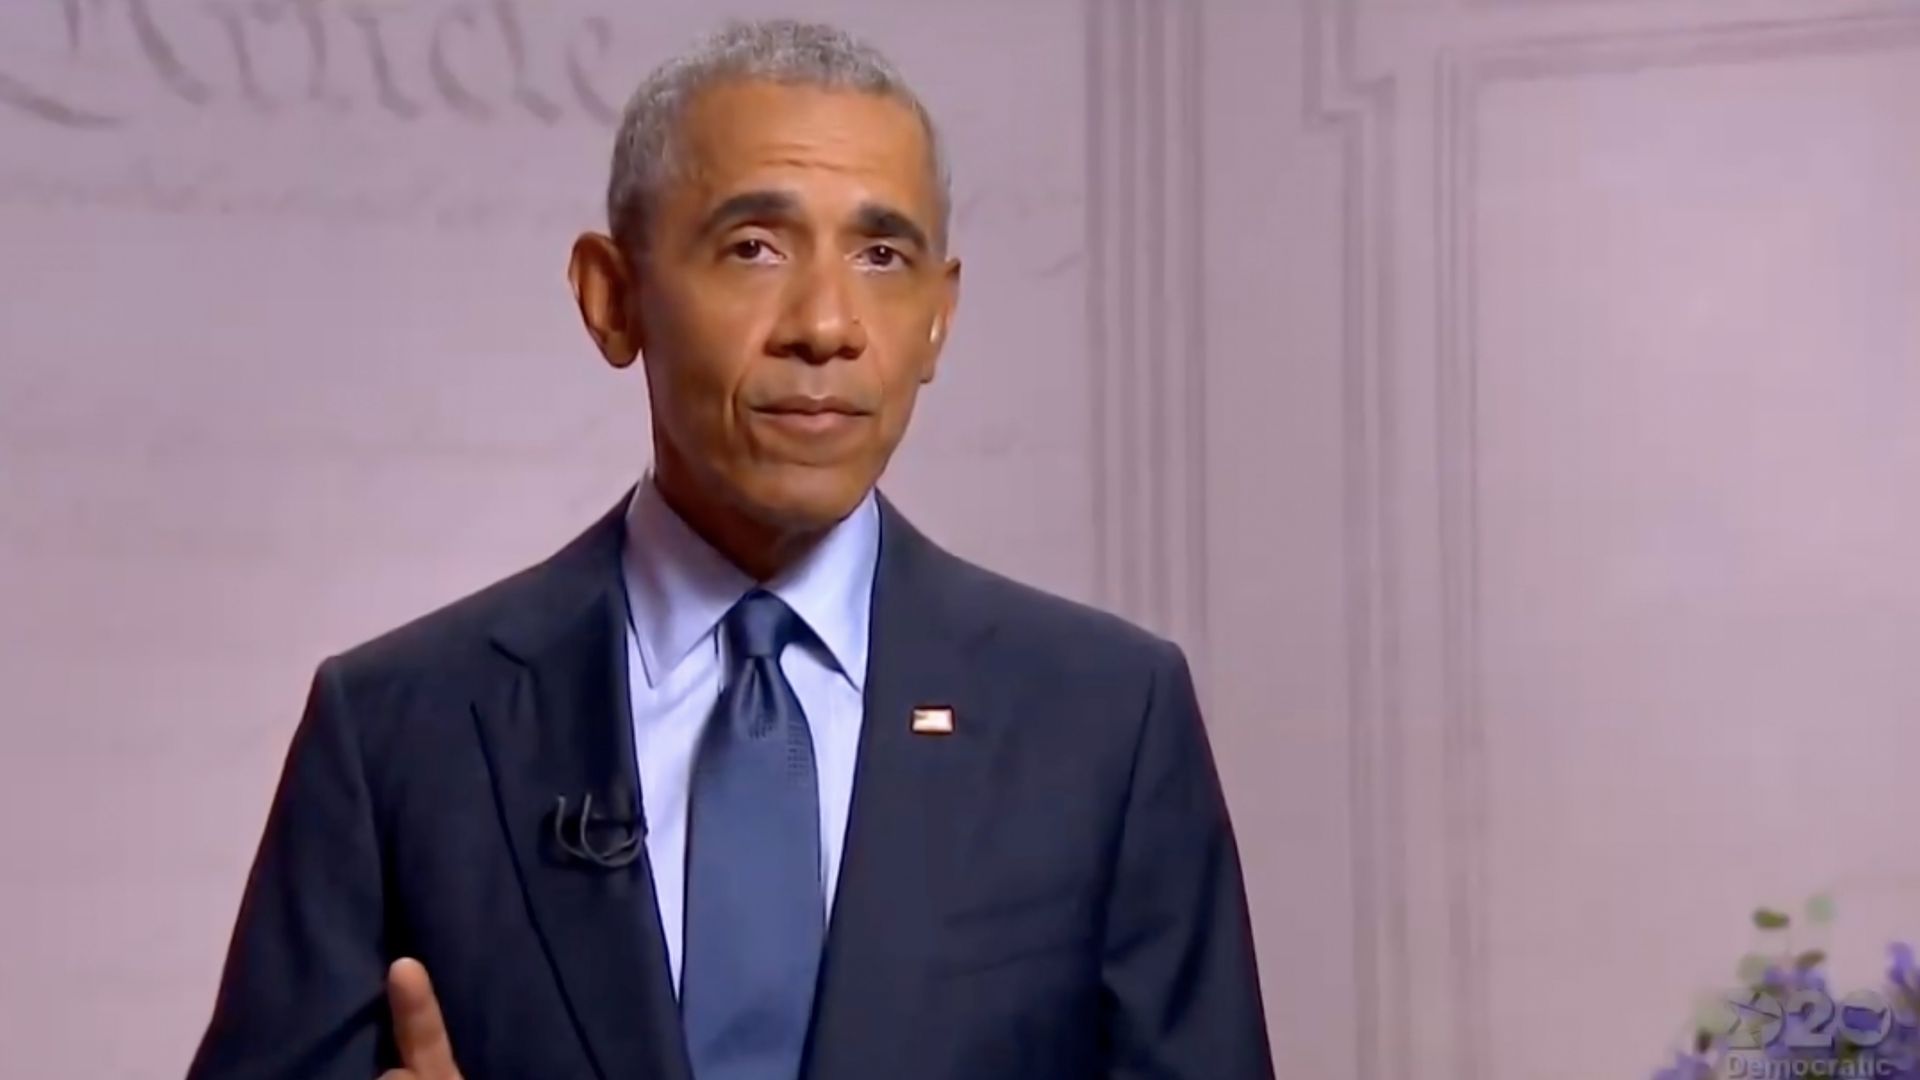 Former U.S. President Barack Obama addresses the virtual convention on August 19